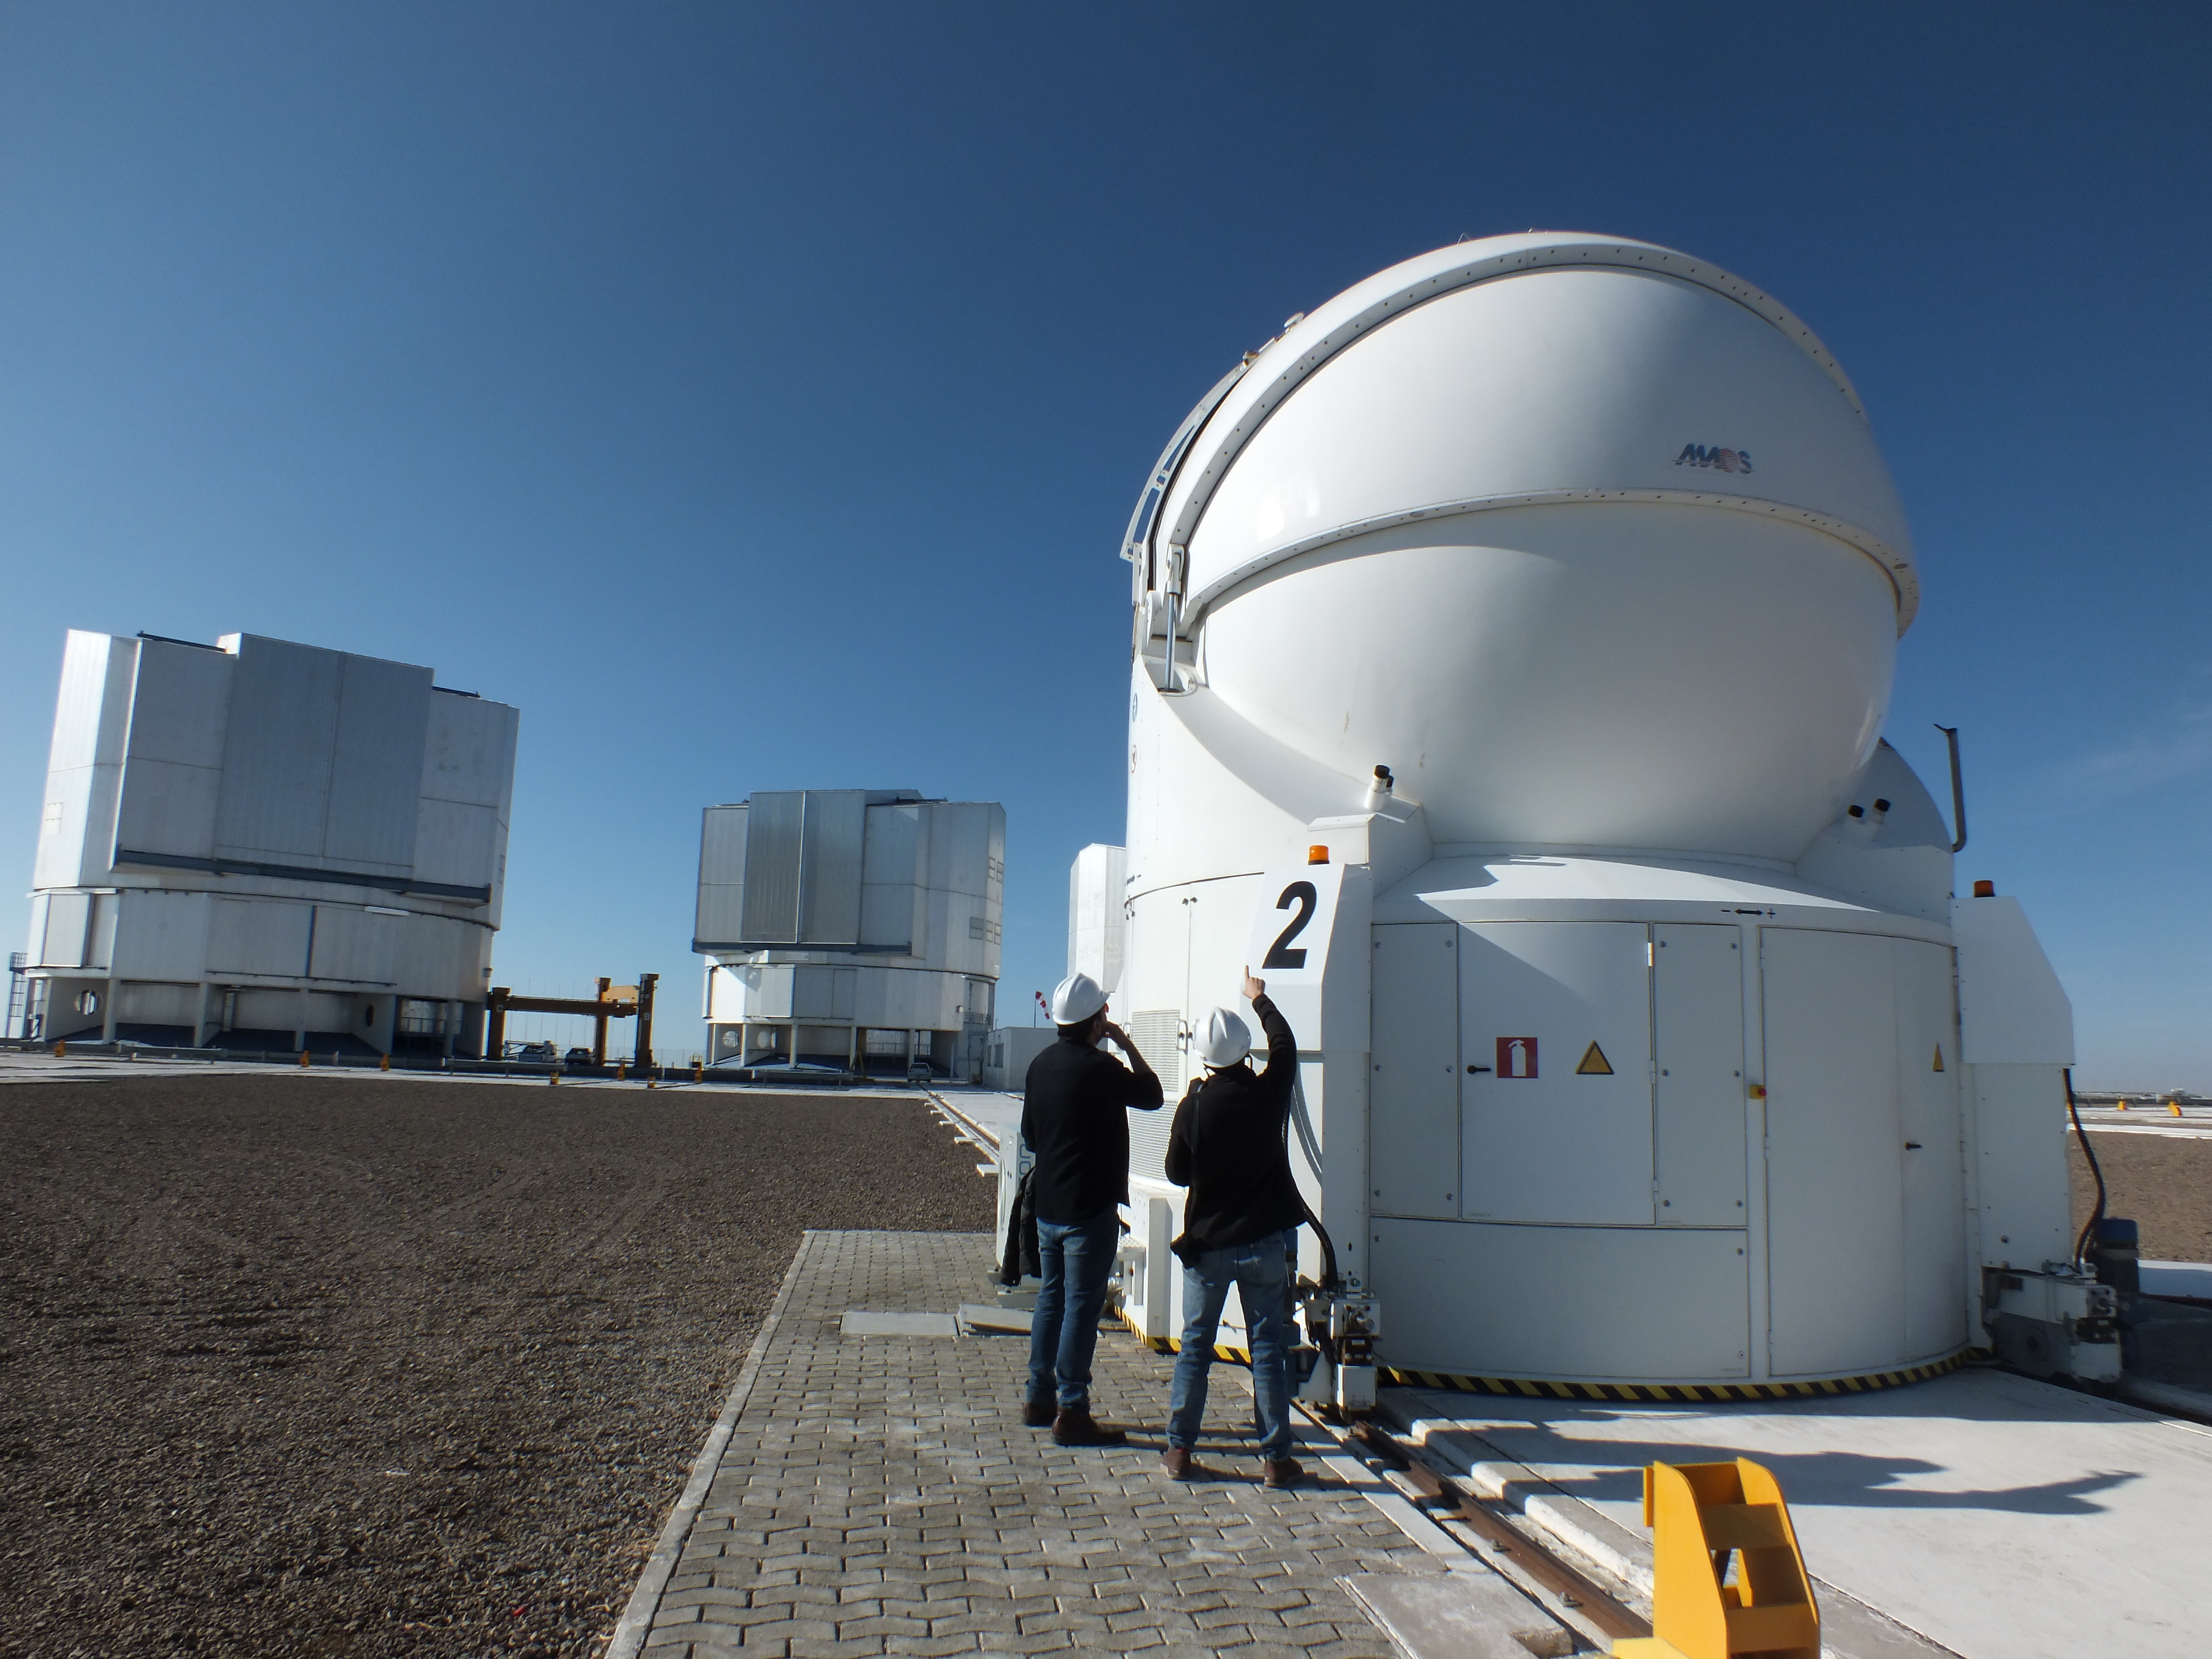 Observatorio  Paranal |Miguel Sánchez| Agence France-Presse